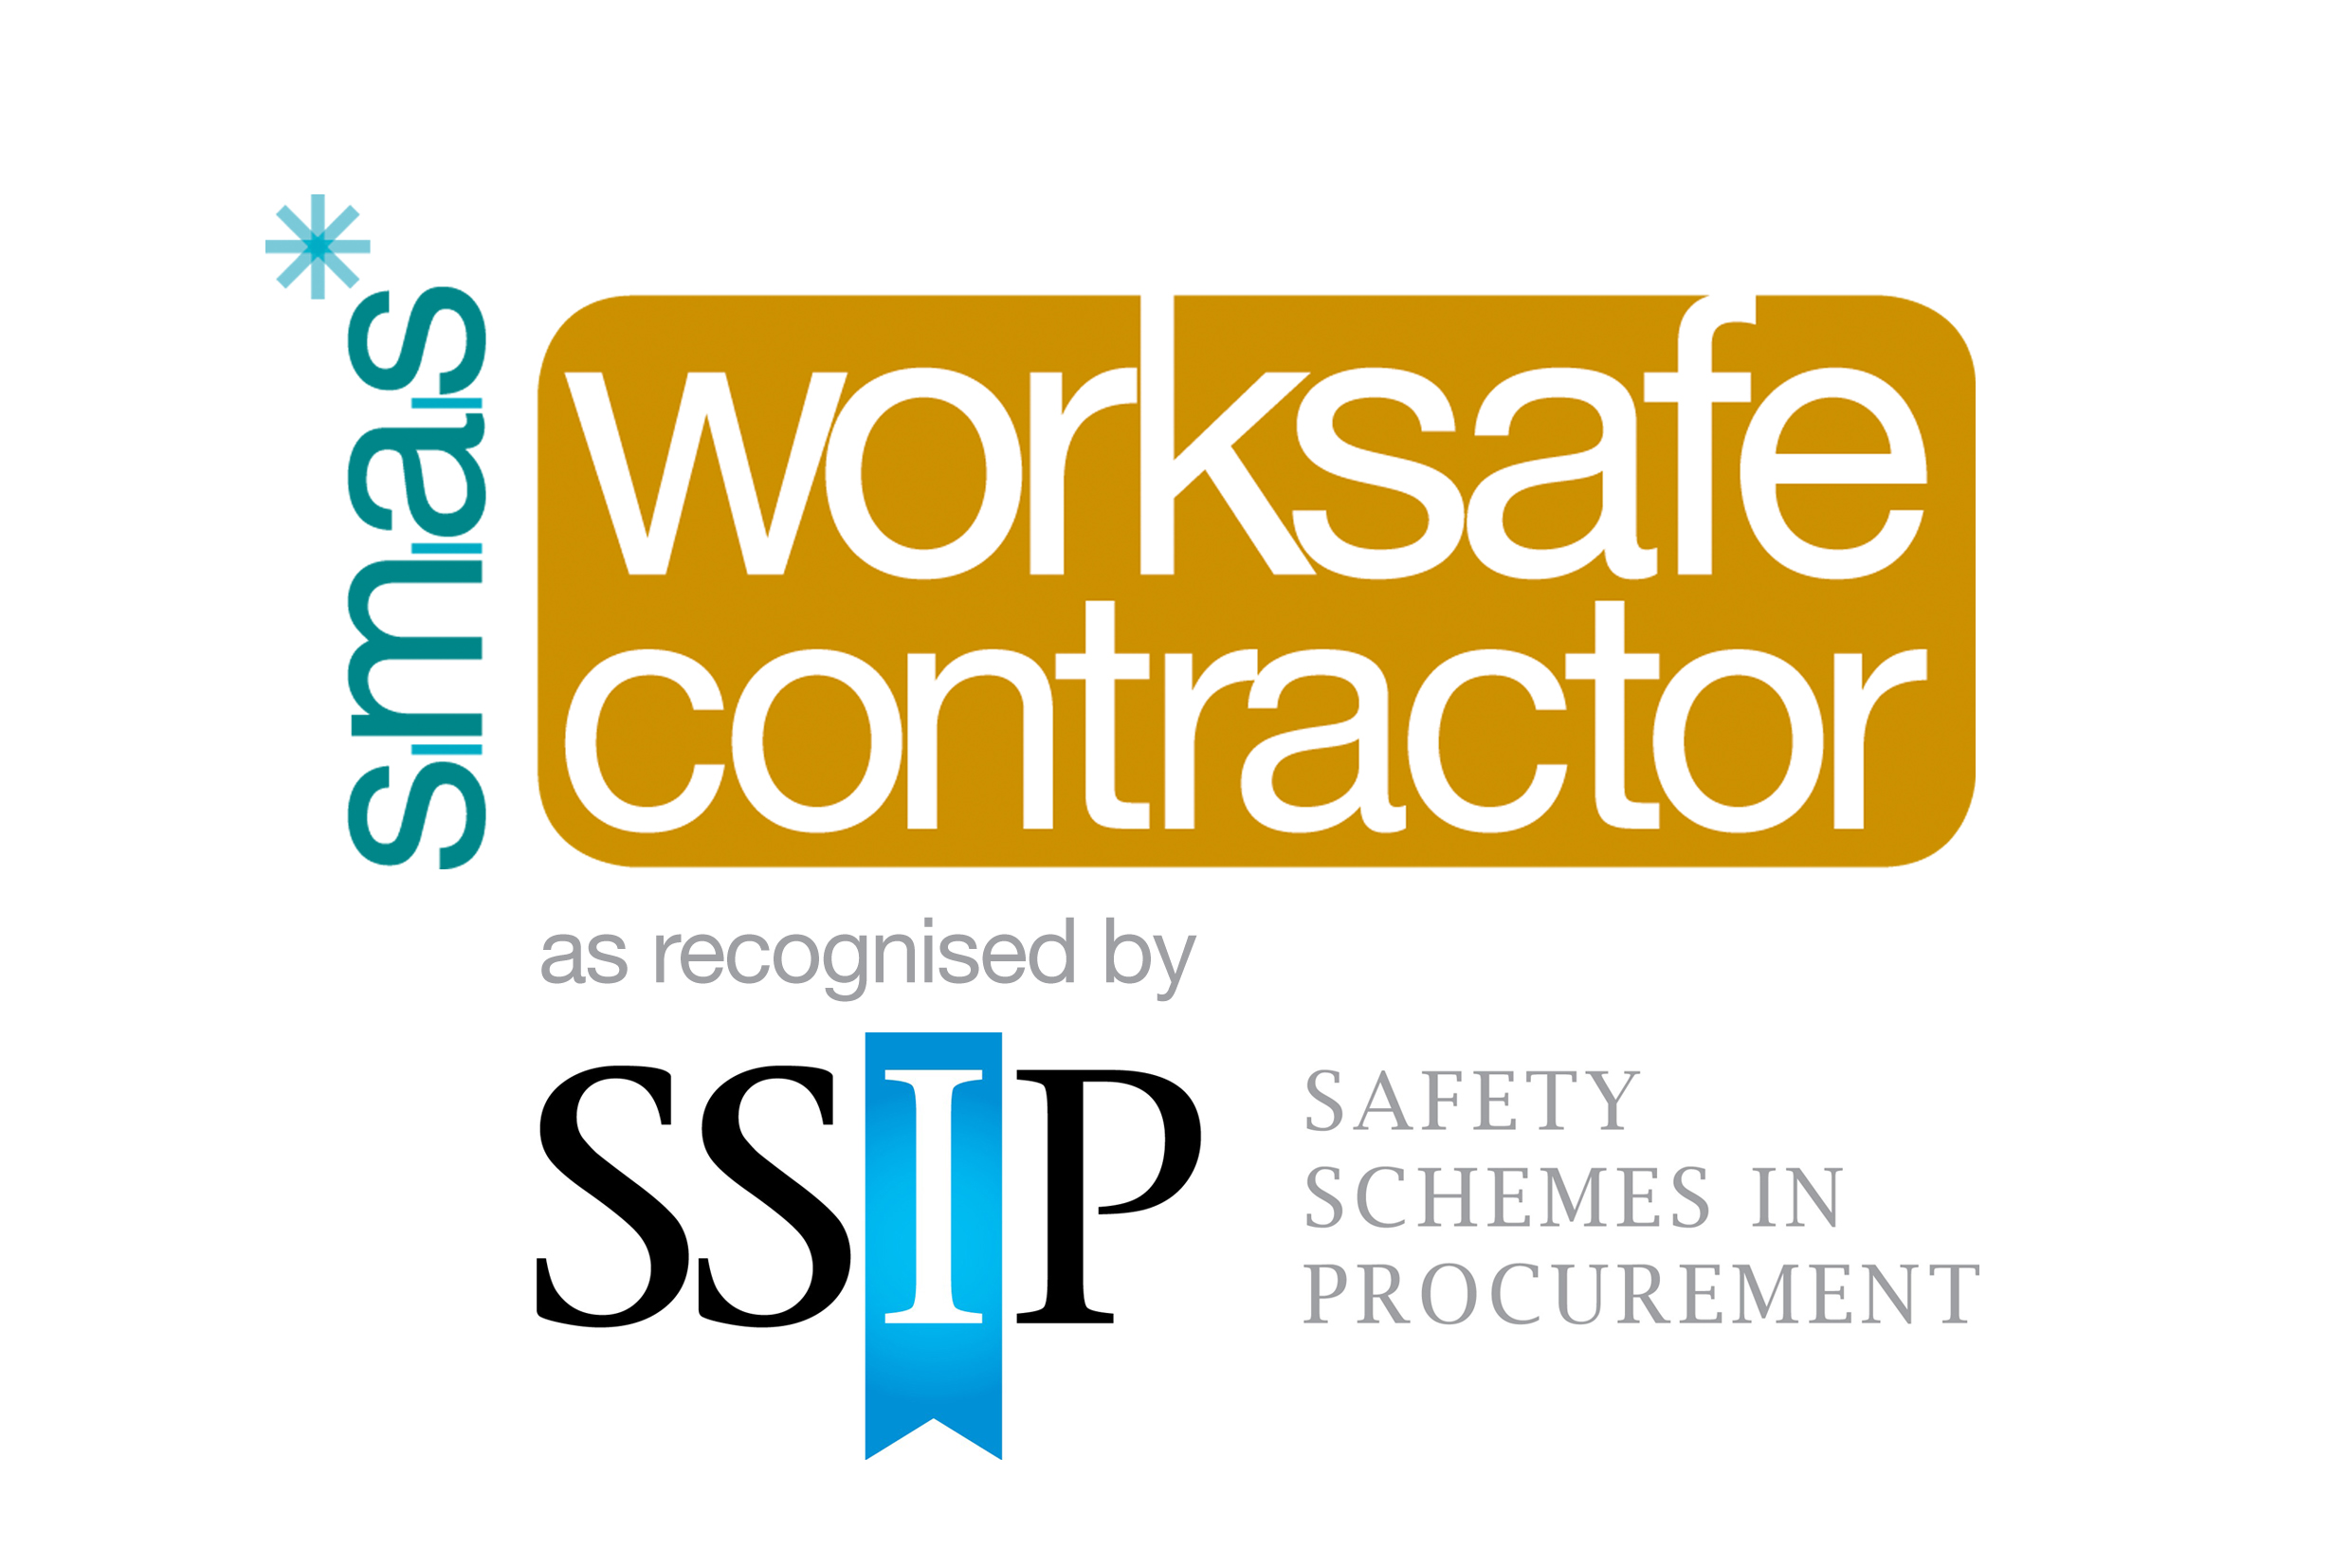 SMAS worksafe contractor logo